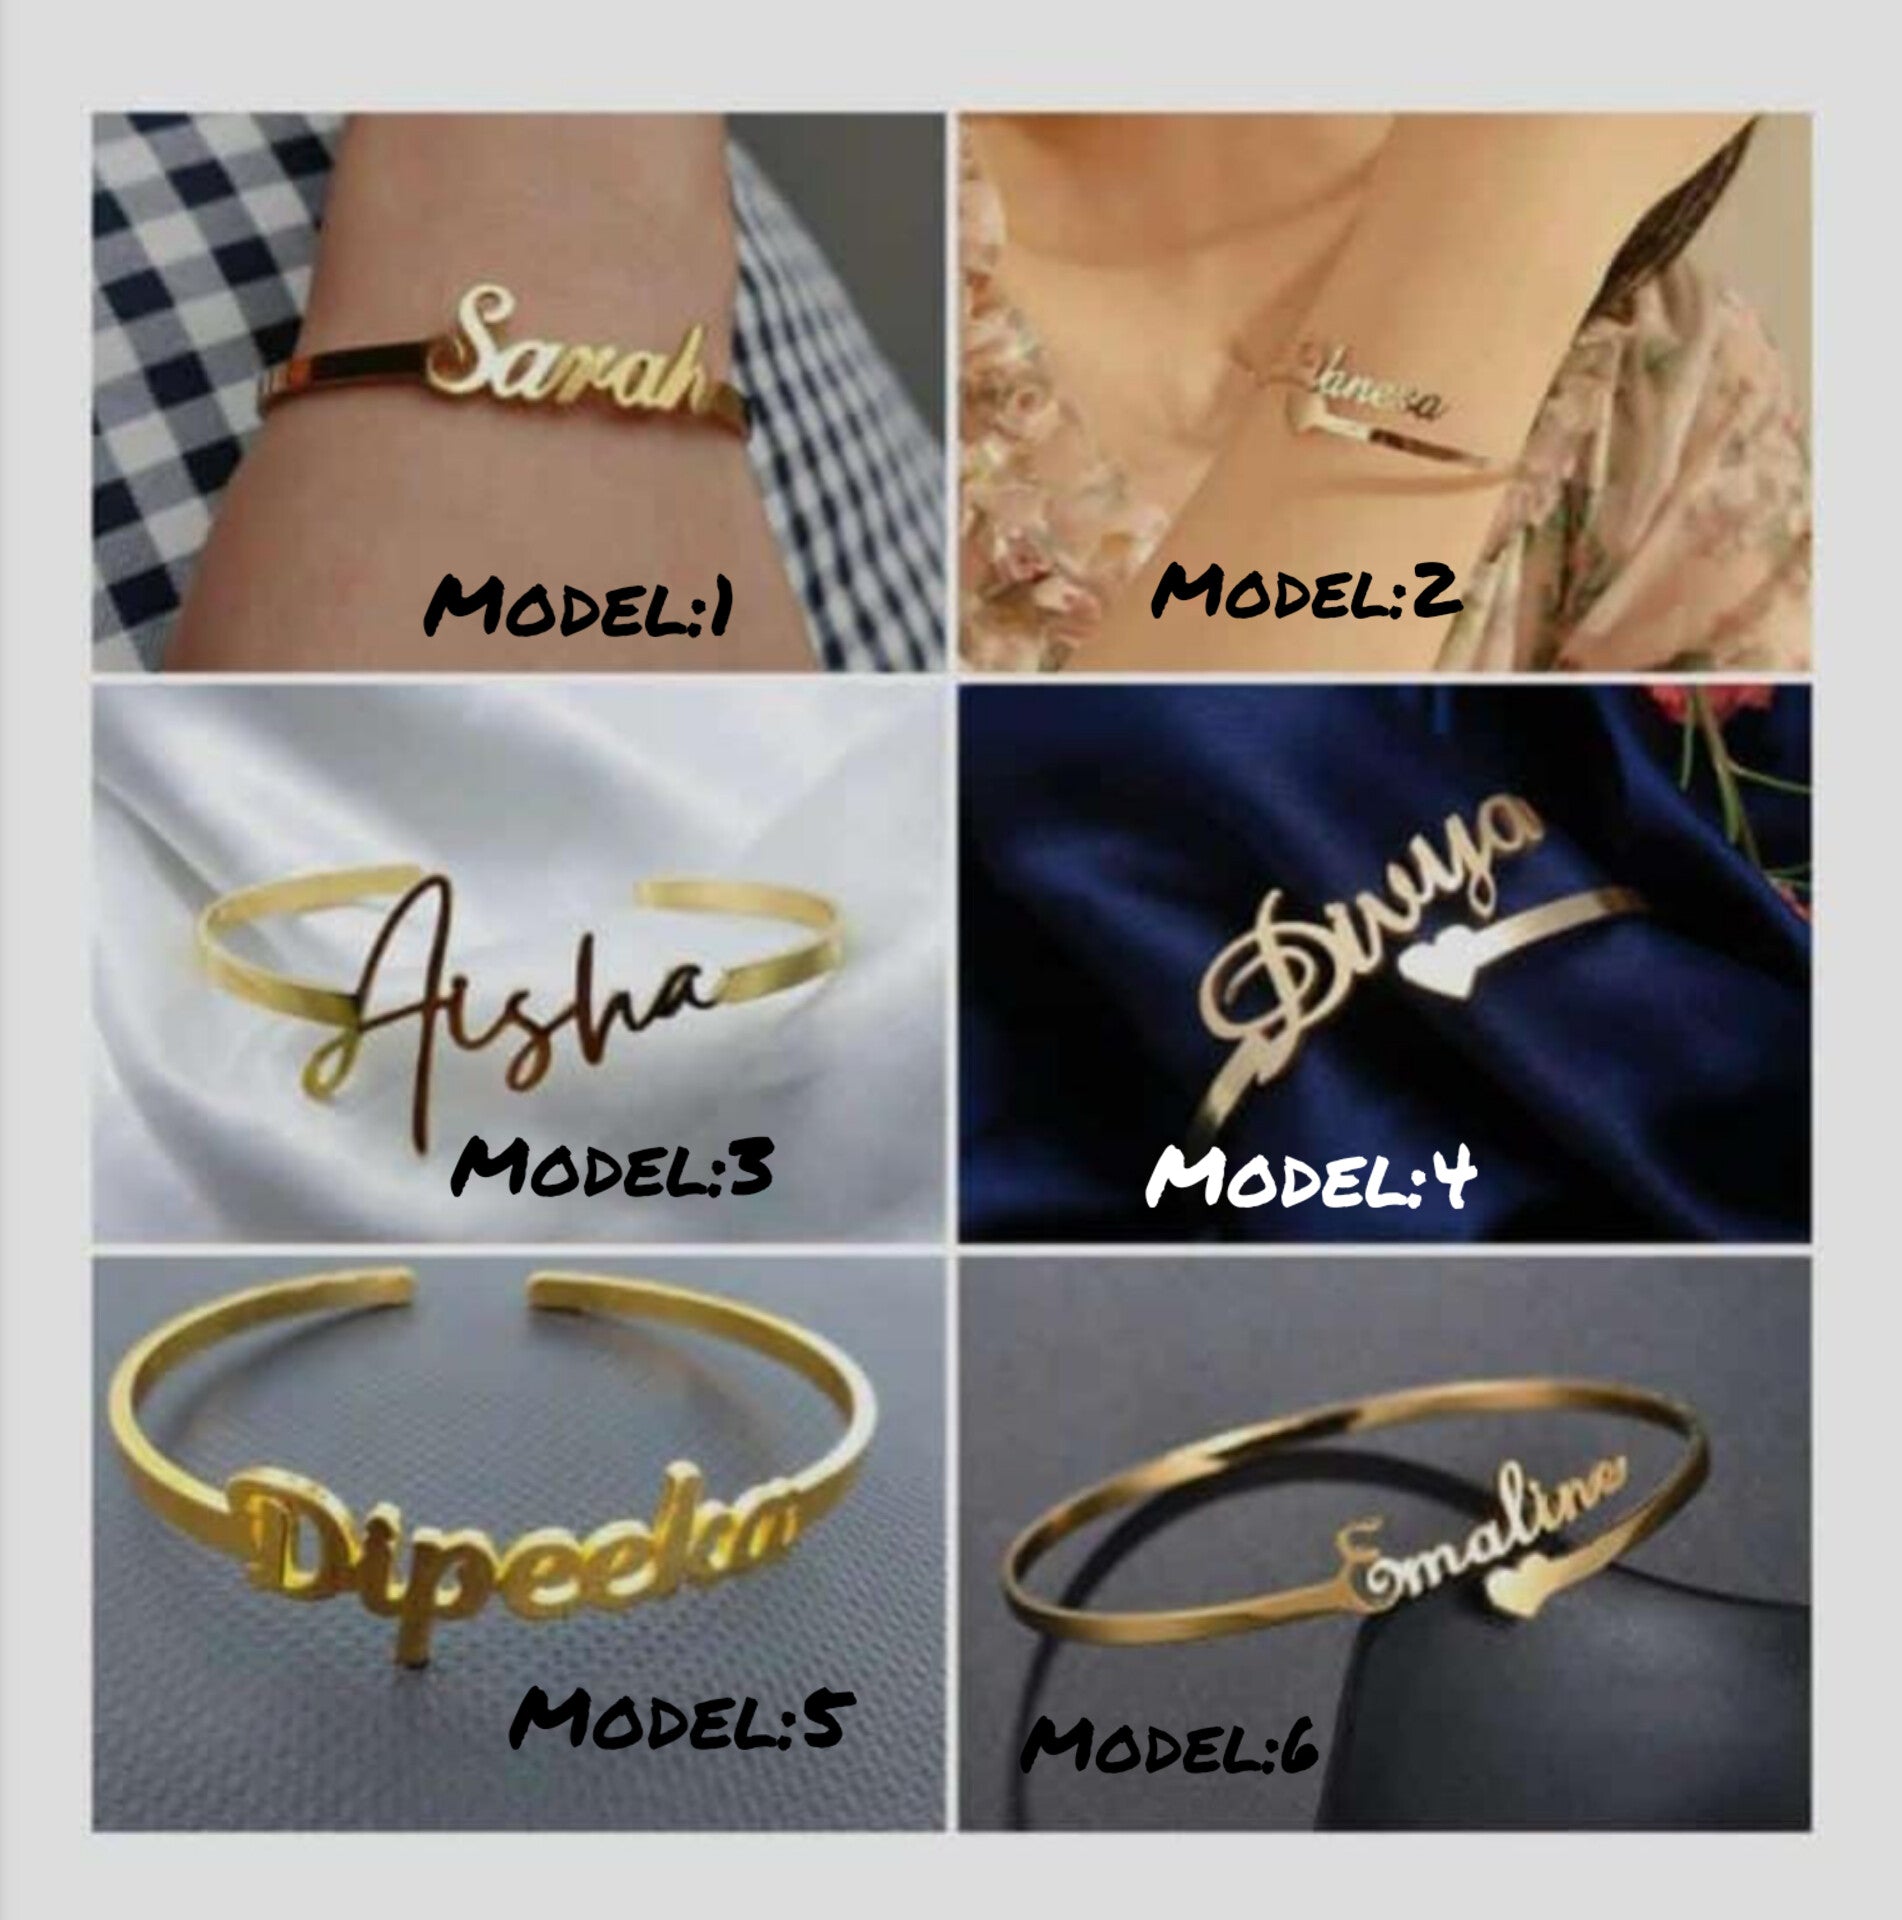 Buy Engraved Name Bracelet - S35475 – SIA Jewellery